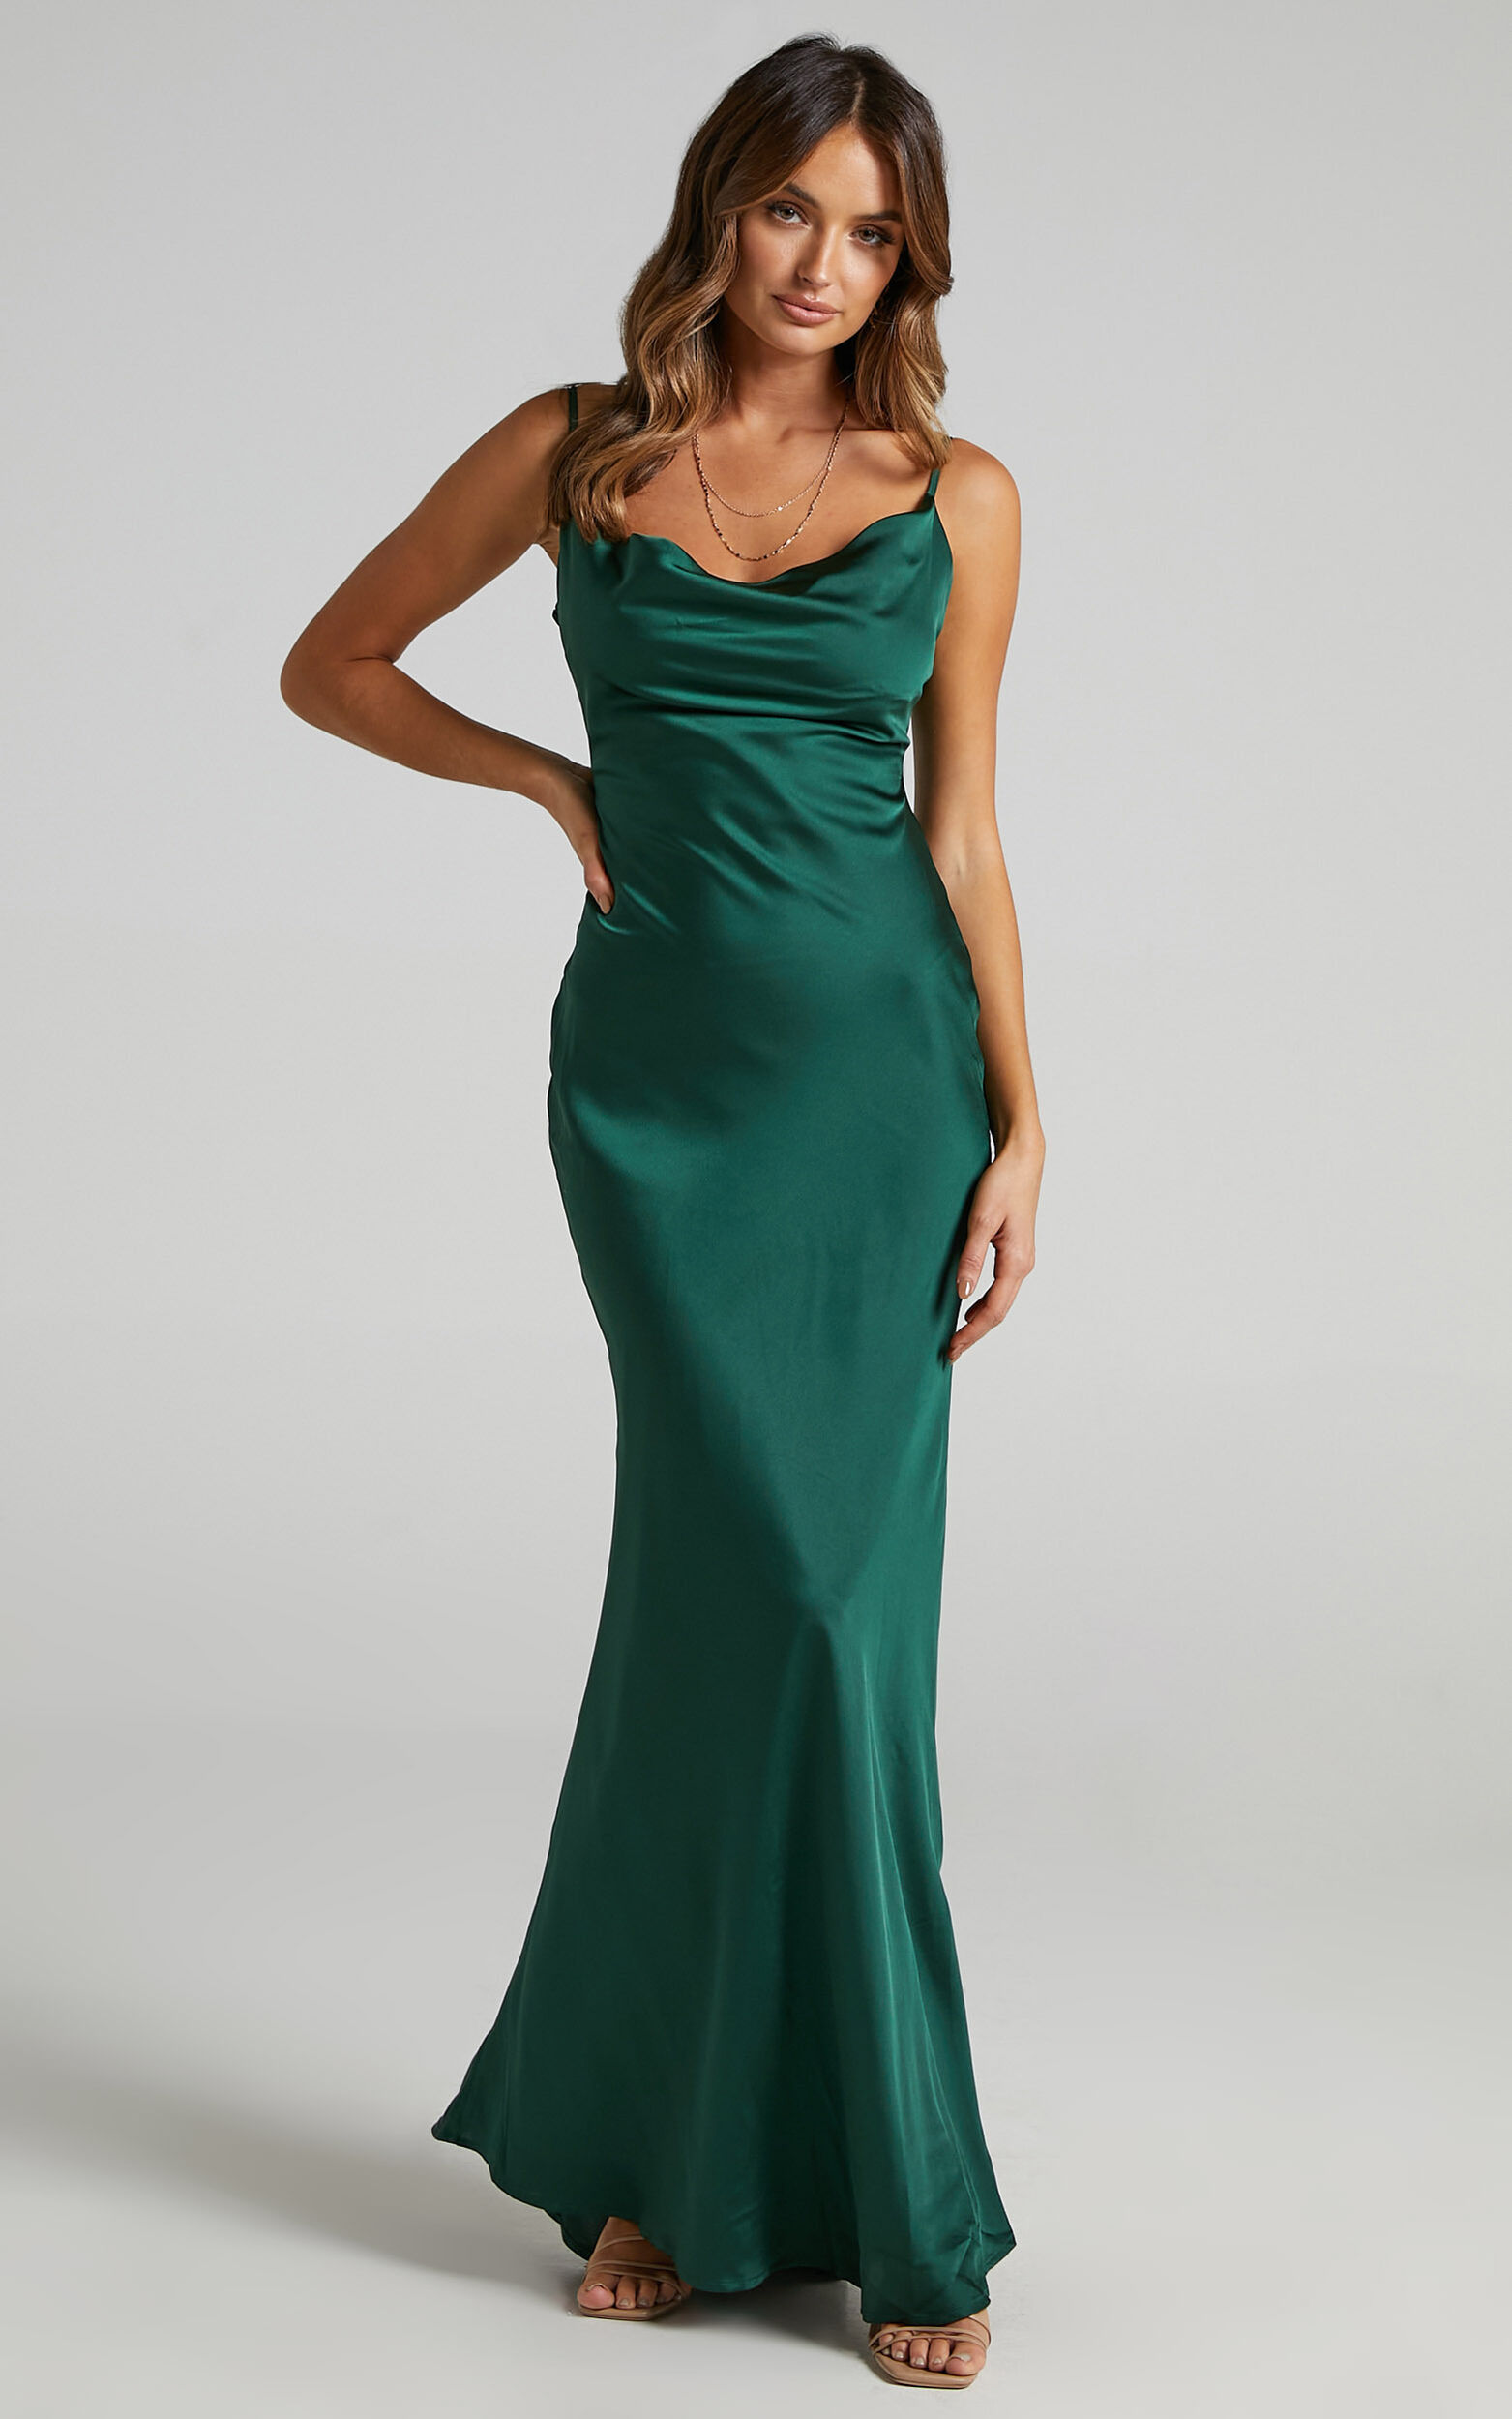 Lunaria Midaxi Dress - Cowl Mermaid Slip Dress in Emerald Satin - 06, GRN3